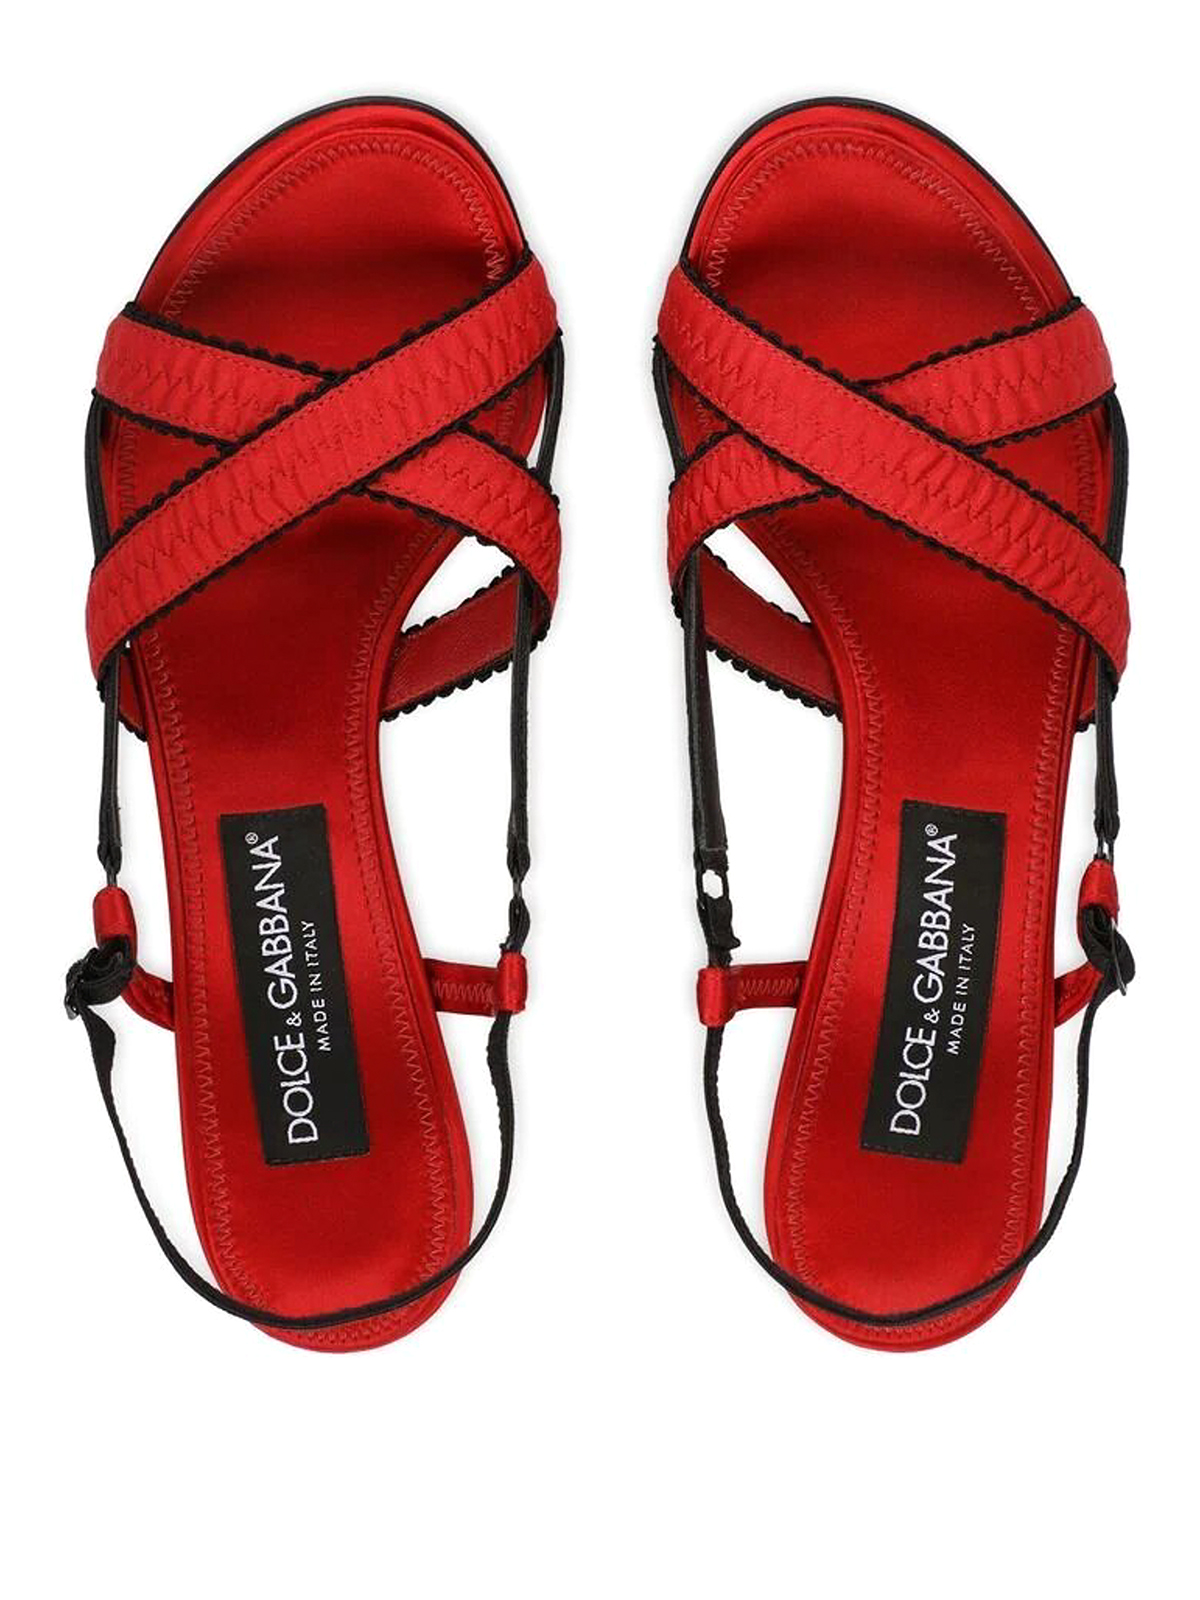 Shop Dolce & Gabbana Sandalias - Keira 105 In Red